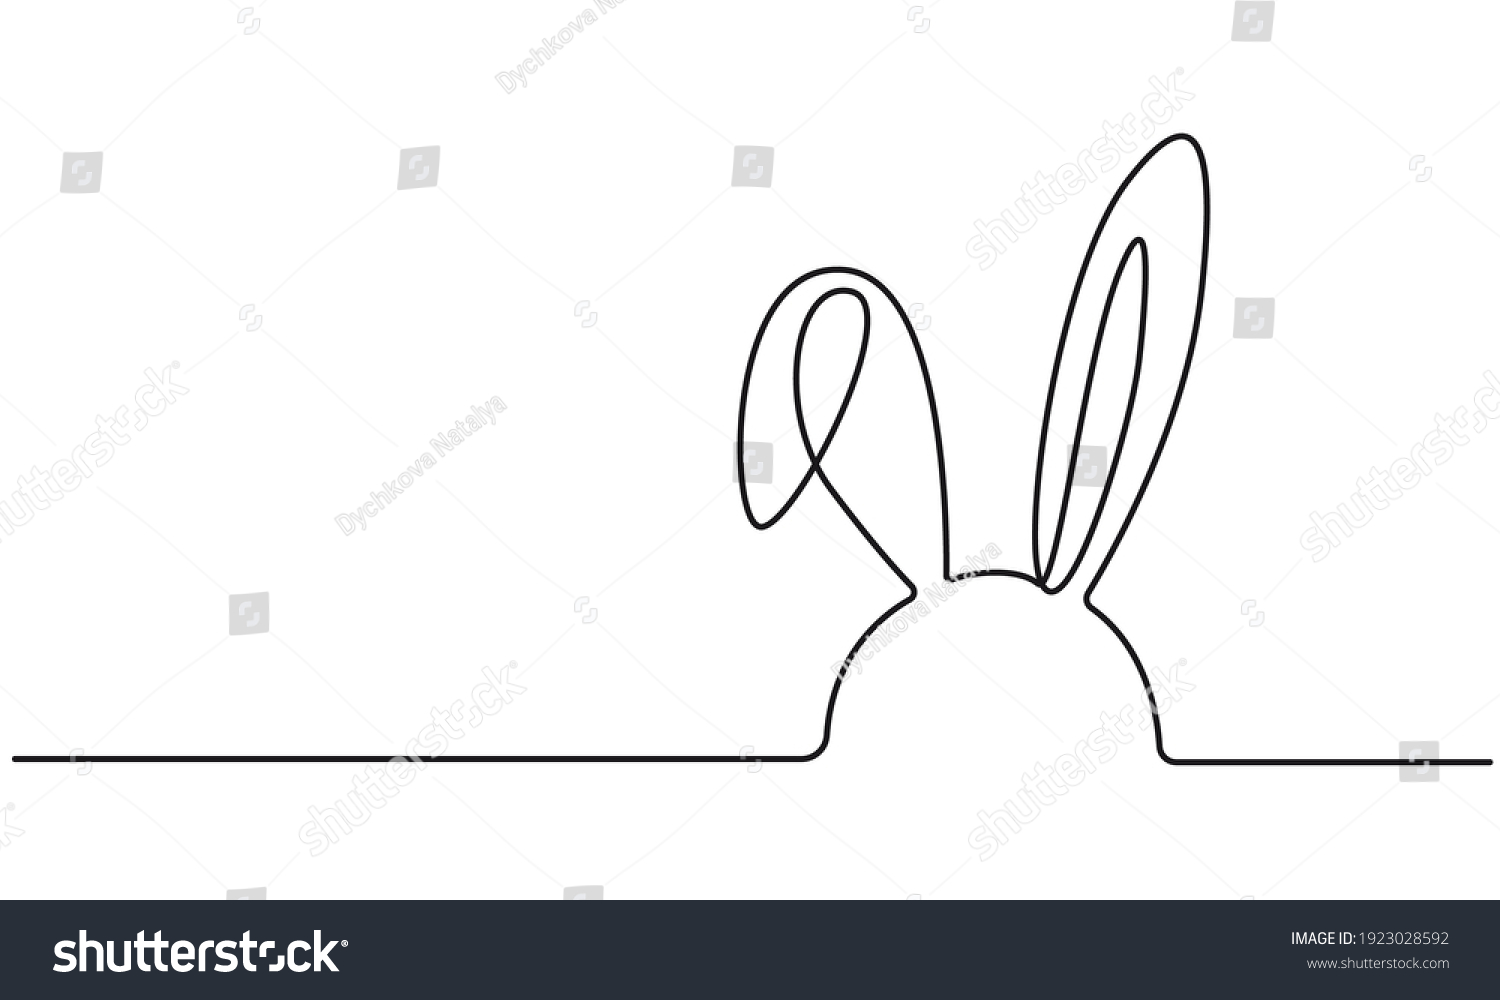 235444 Rabbit Drawing Images, Stock Photos & Vectors | Shutterstock